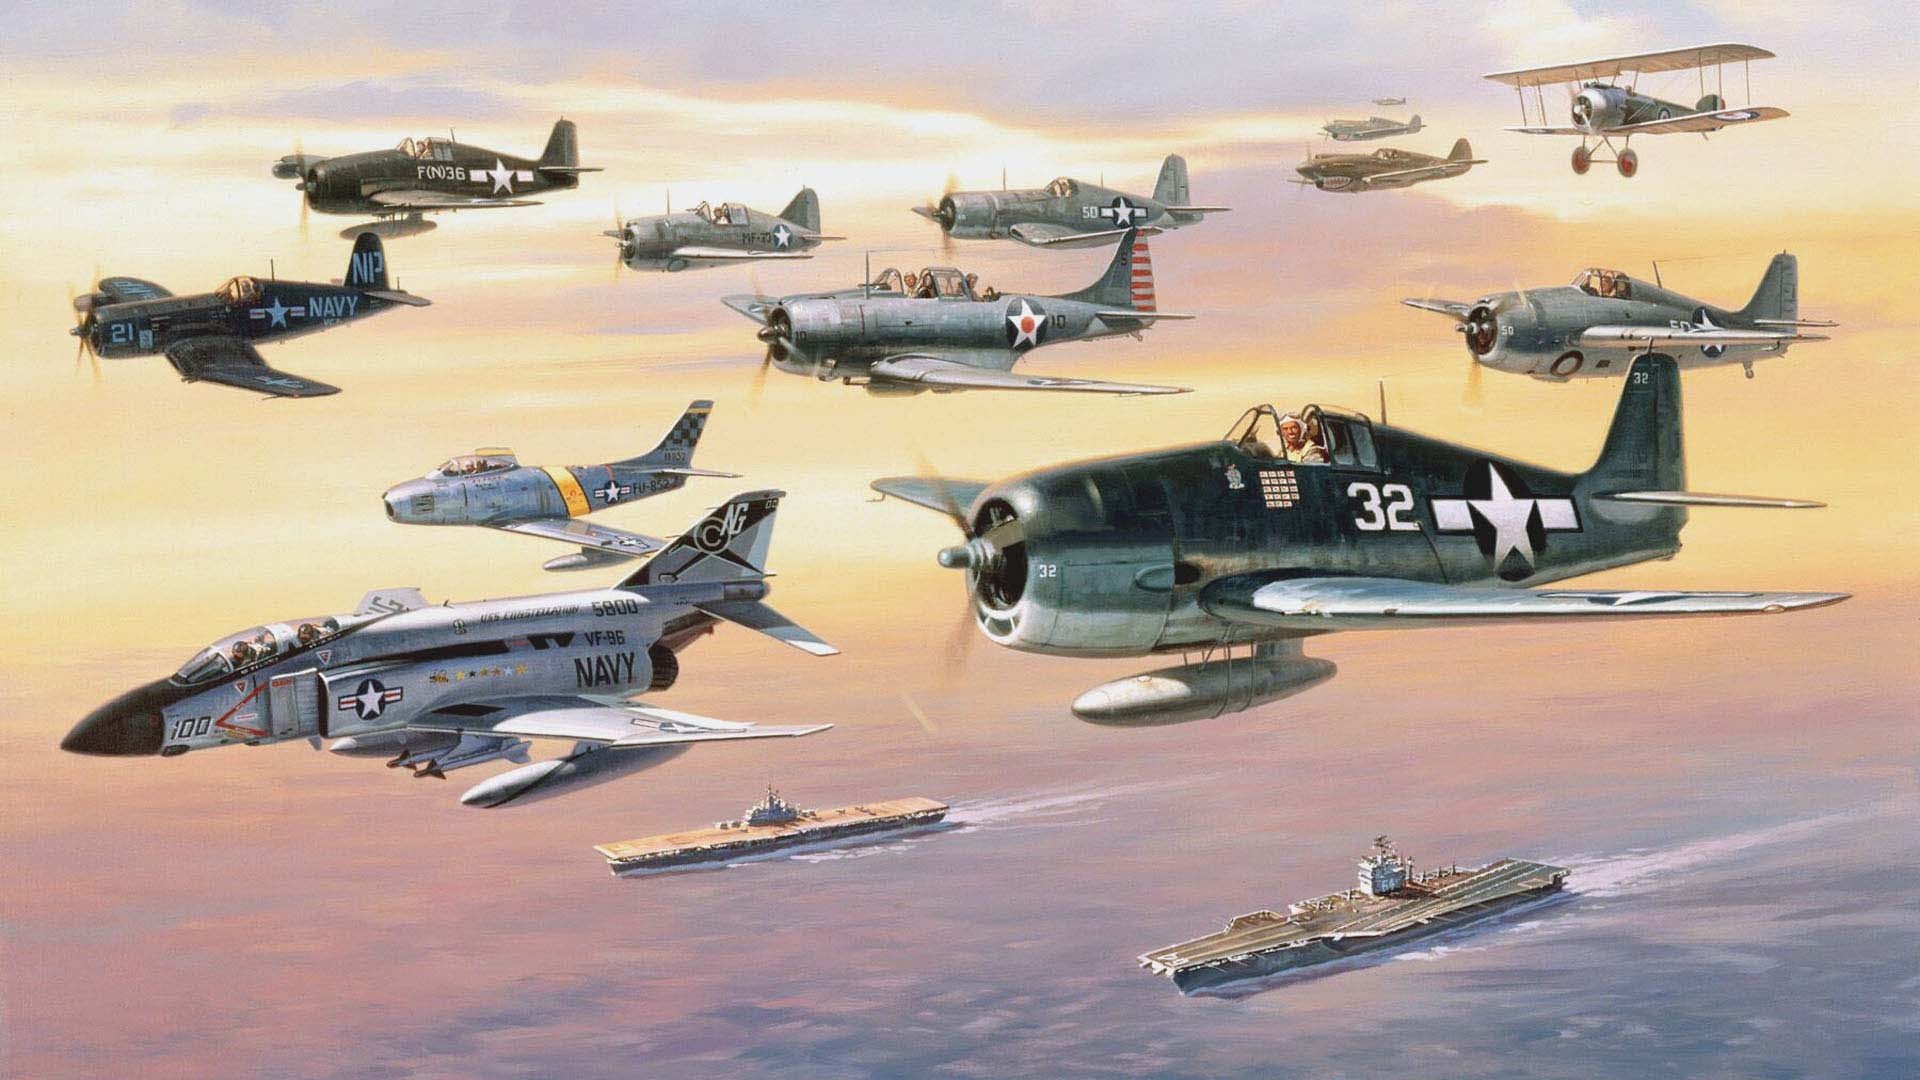 1920x1080 planes aircraft military image wallpaper Wallpaper